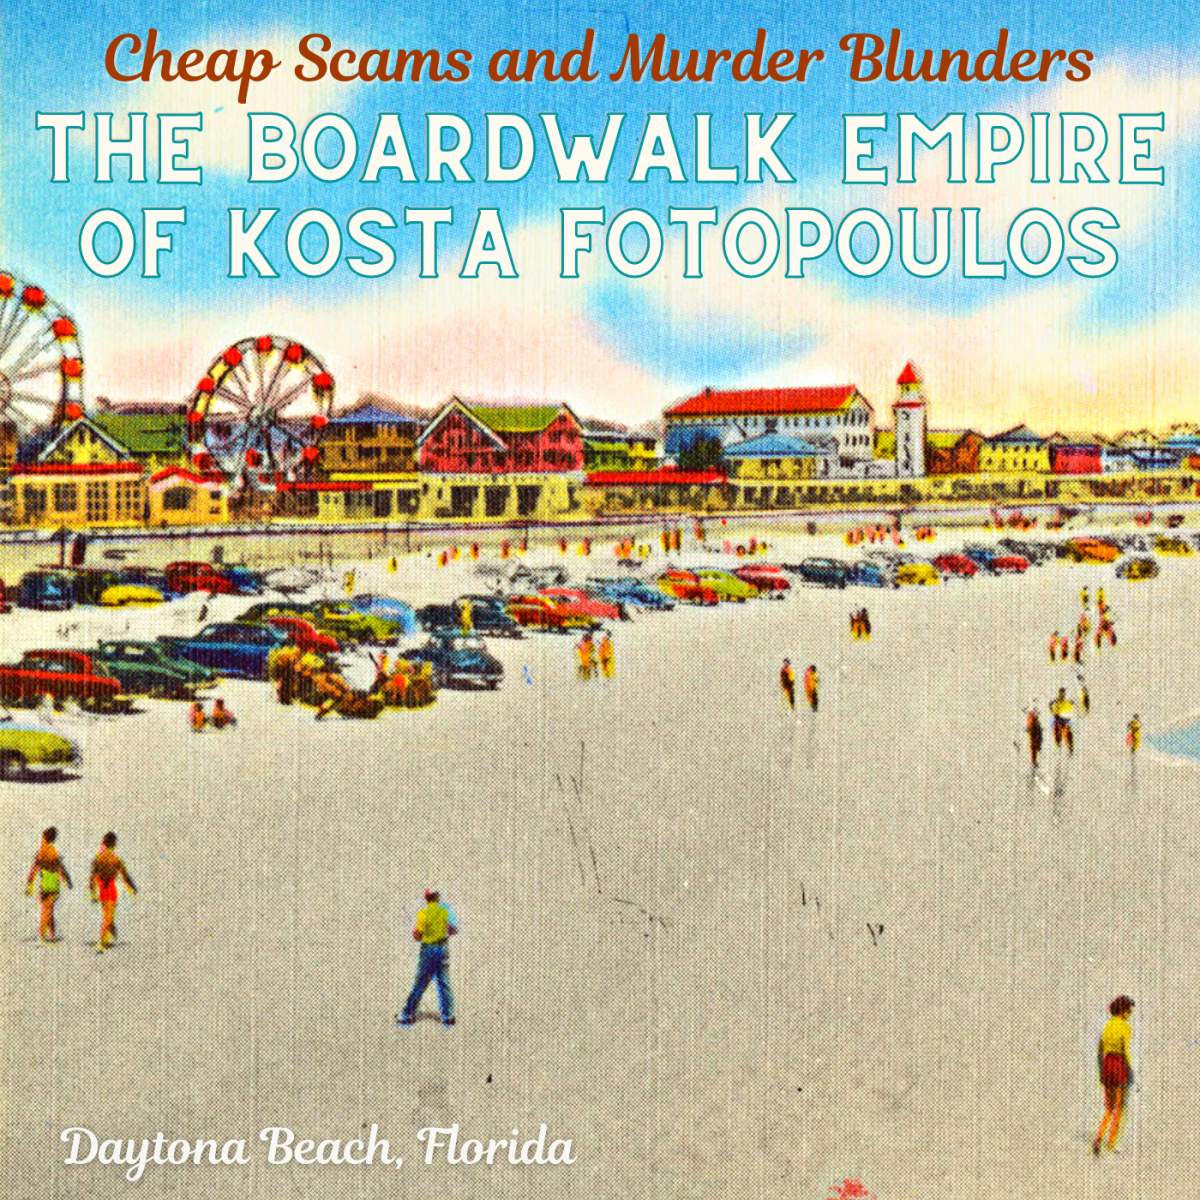 On the Boardwalk: Kosta Fotopoulos and Deidre Hunt